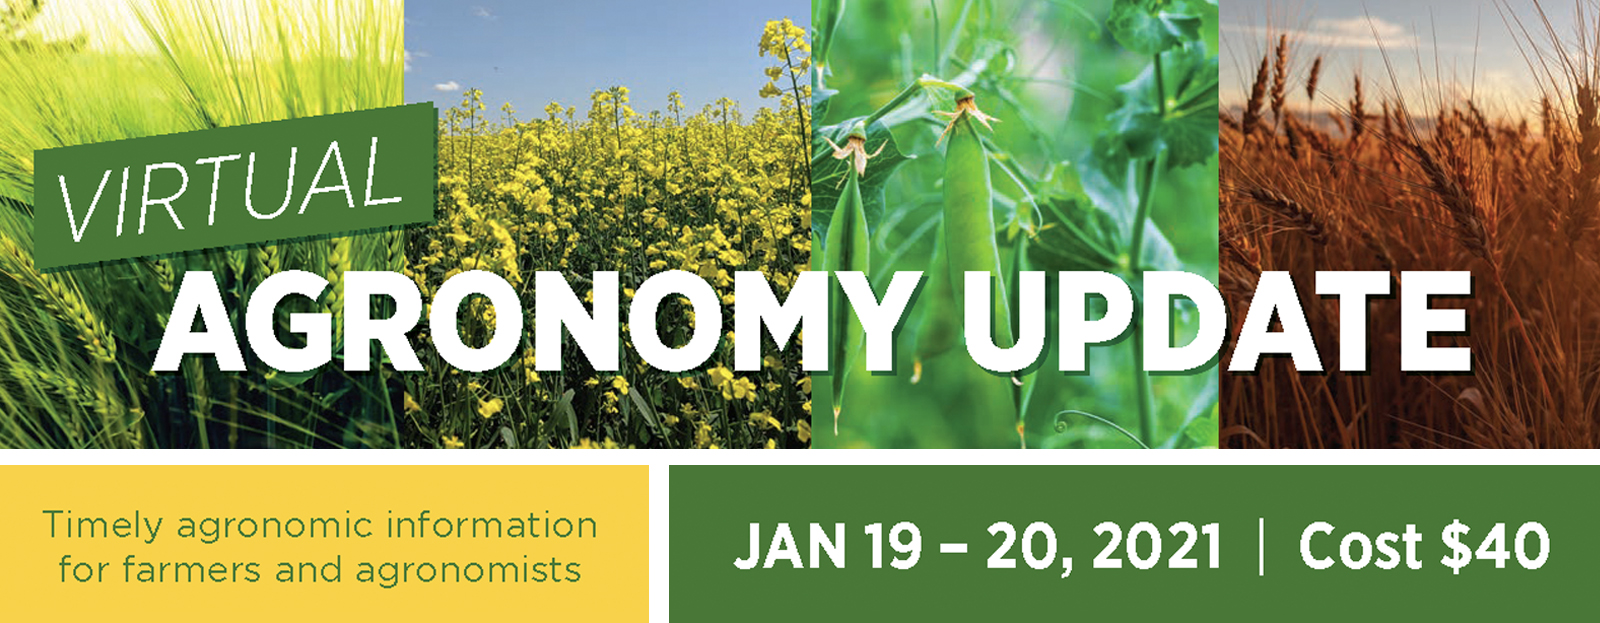 Banner for Agronomy Update 2021